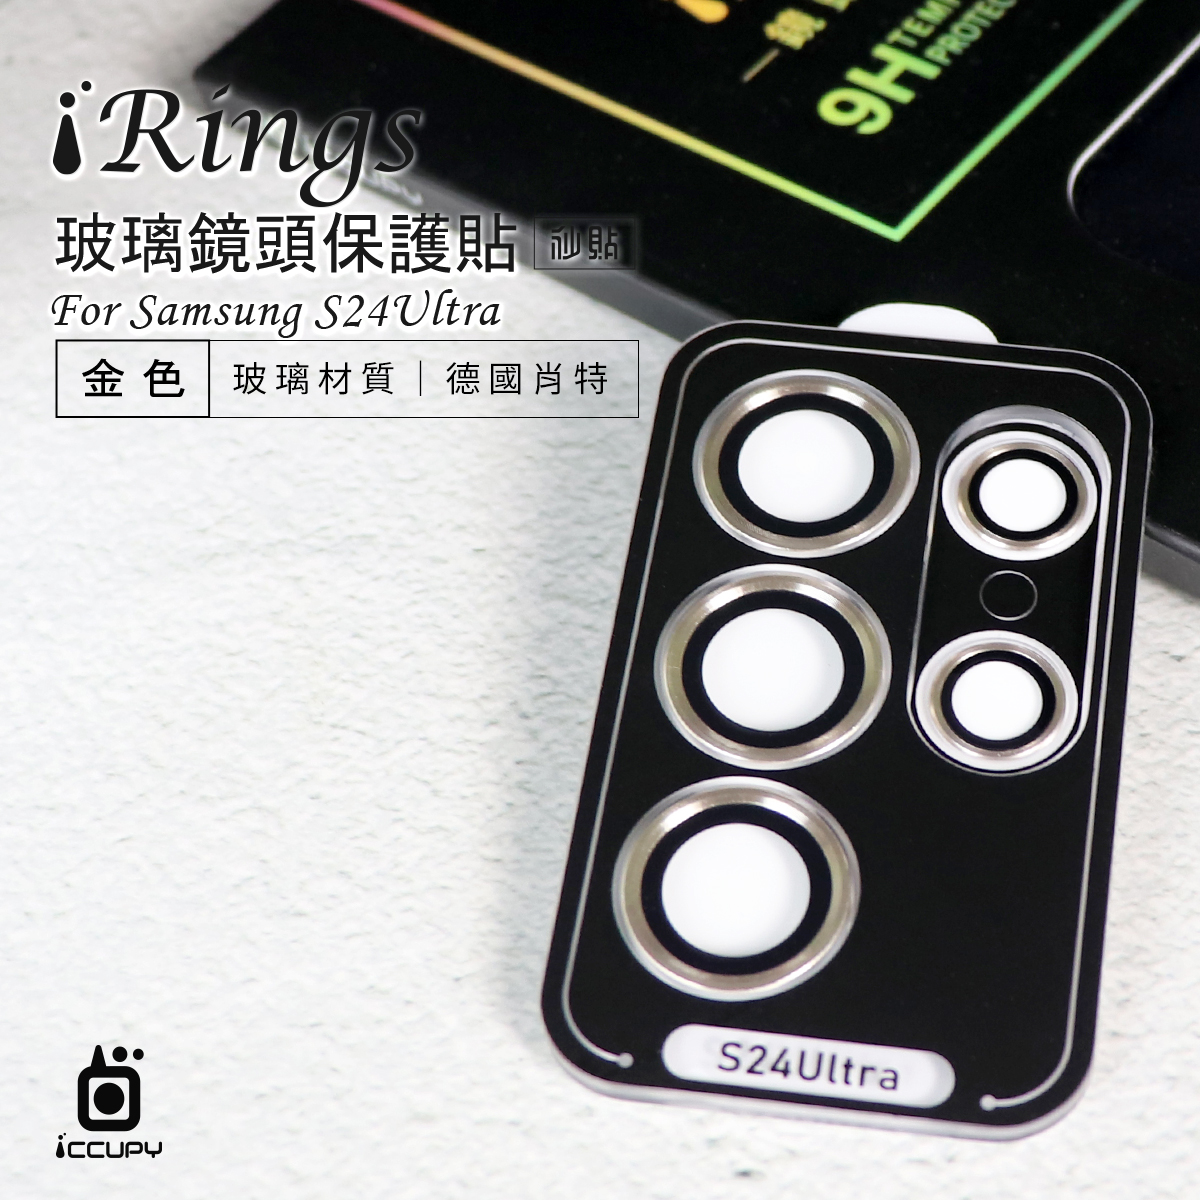 【iRings】玻璃鏡頭保護貼-5顆 FOR SAMSUNG S24 ULTRA (金)